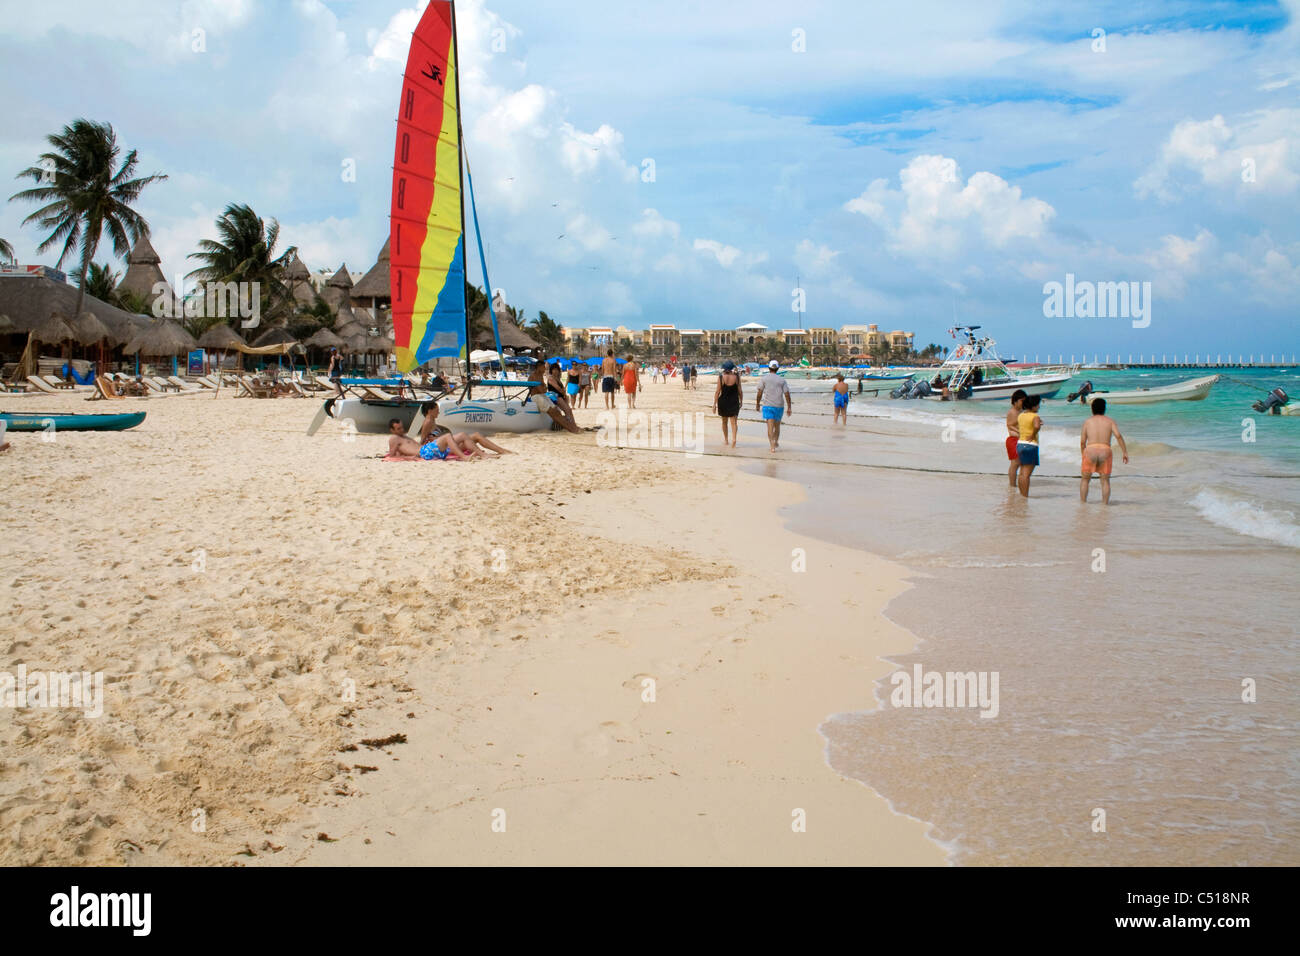 Menschen am Strand von Playa del Carmen, Yukatan, Mexiko, people at the sandy beach, Playa del Carmen, Yucatan, Mexico Stock Photo